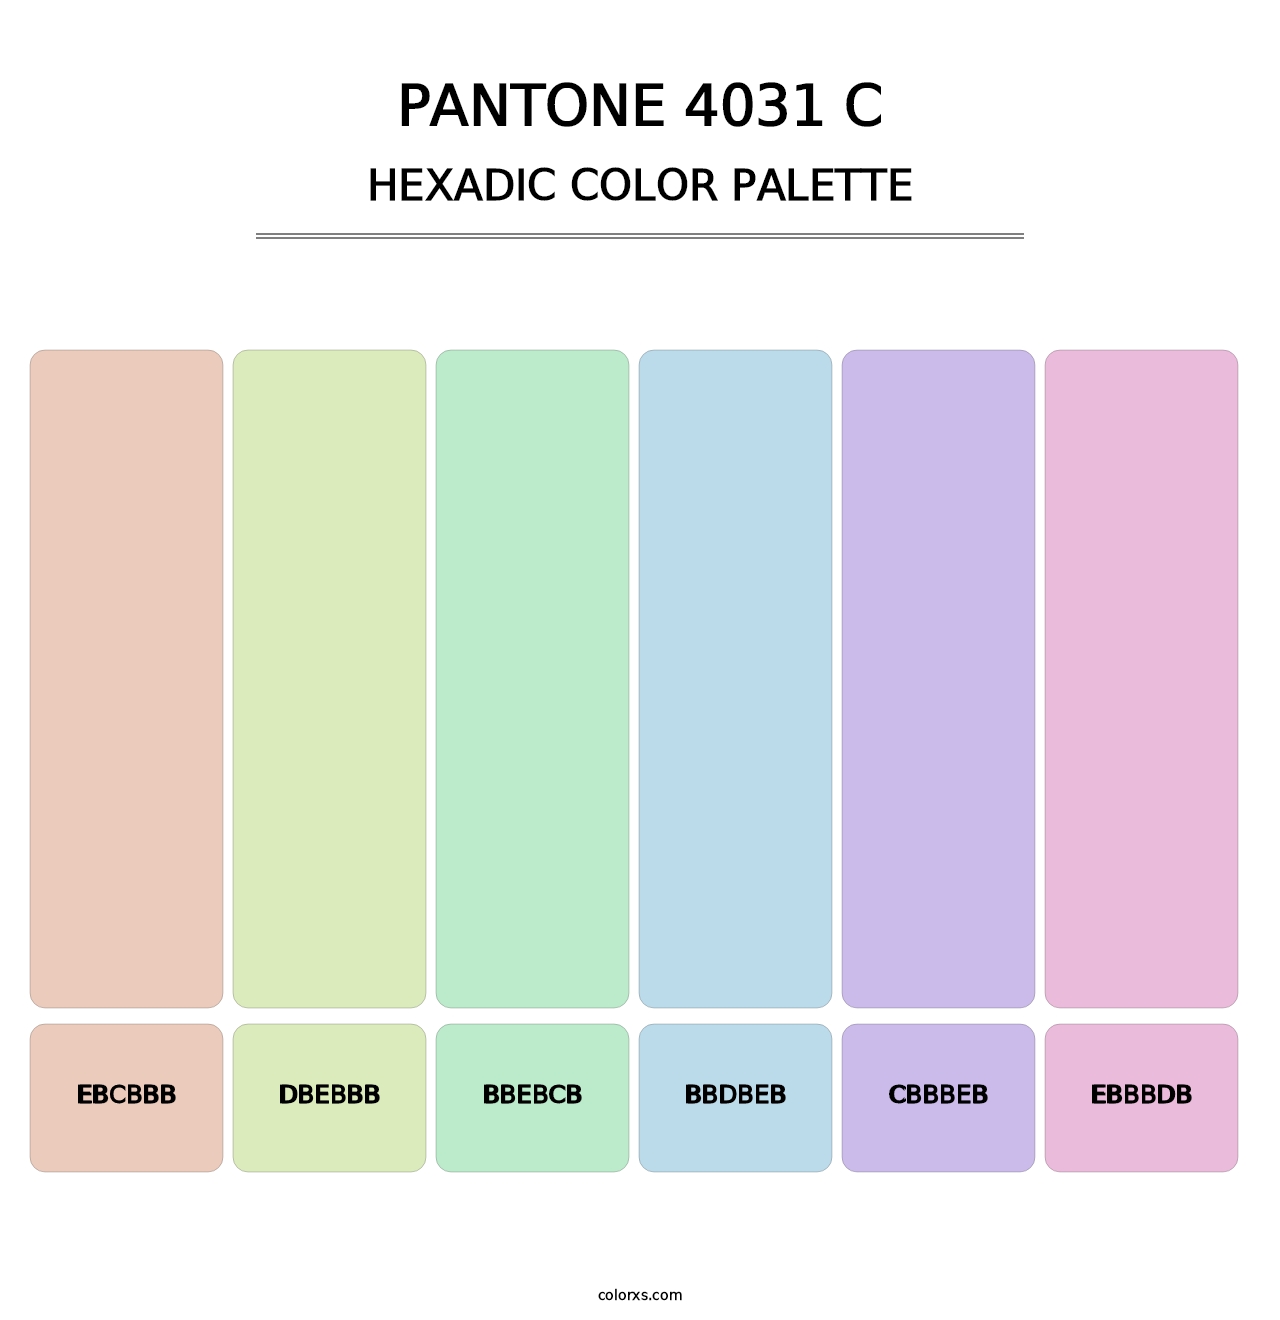 PANTONE 4031 C - Hexadic Color Palette